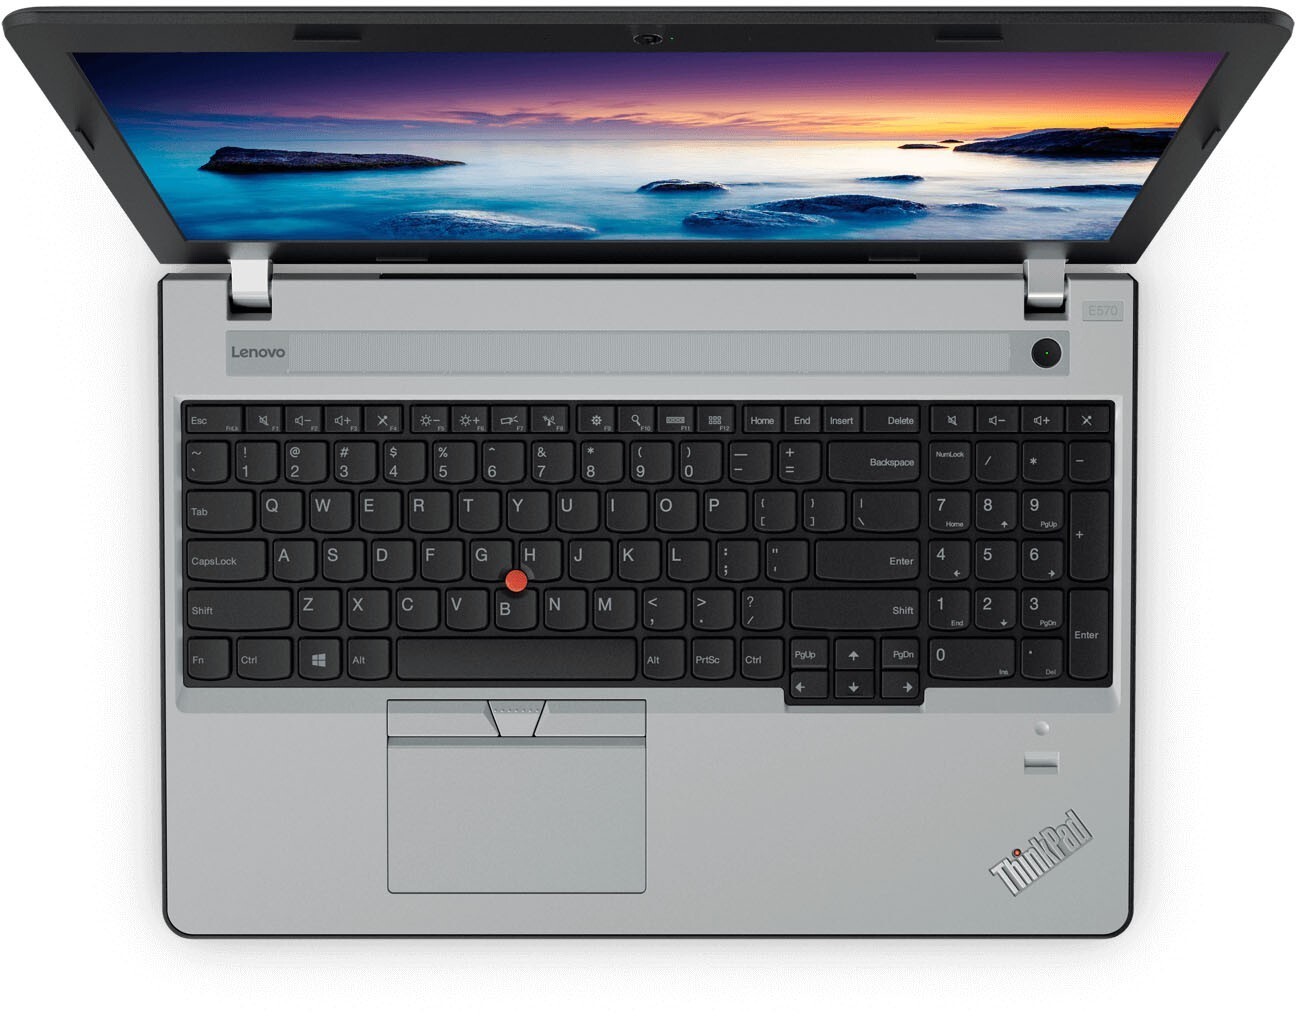 Lenovo ThinkPad E570 Series - Notebookcheck.net External Reviews